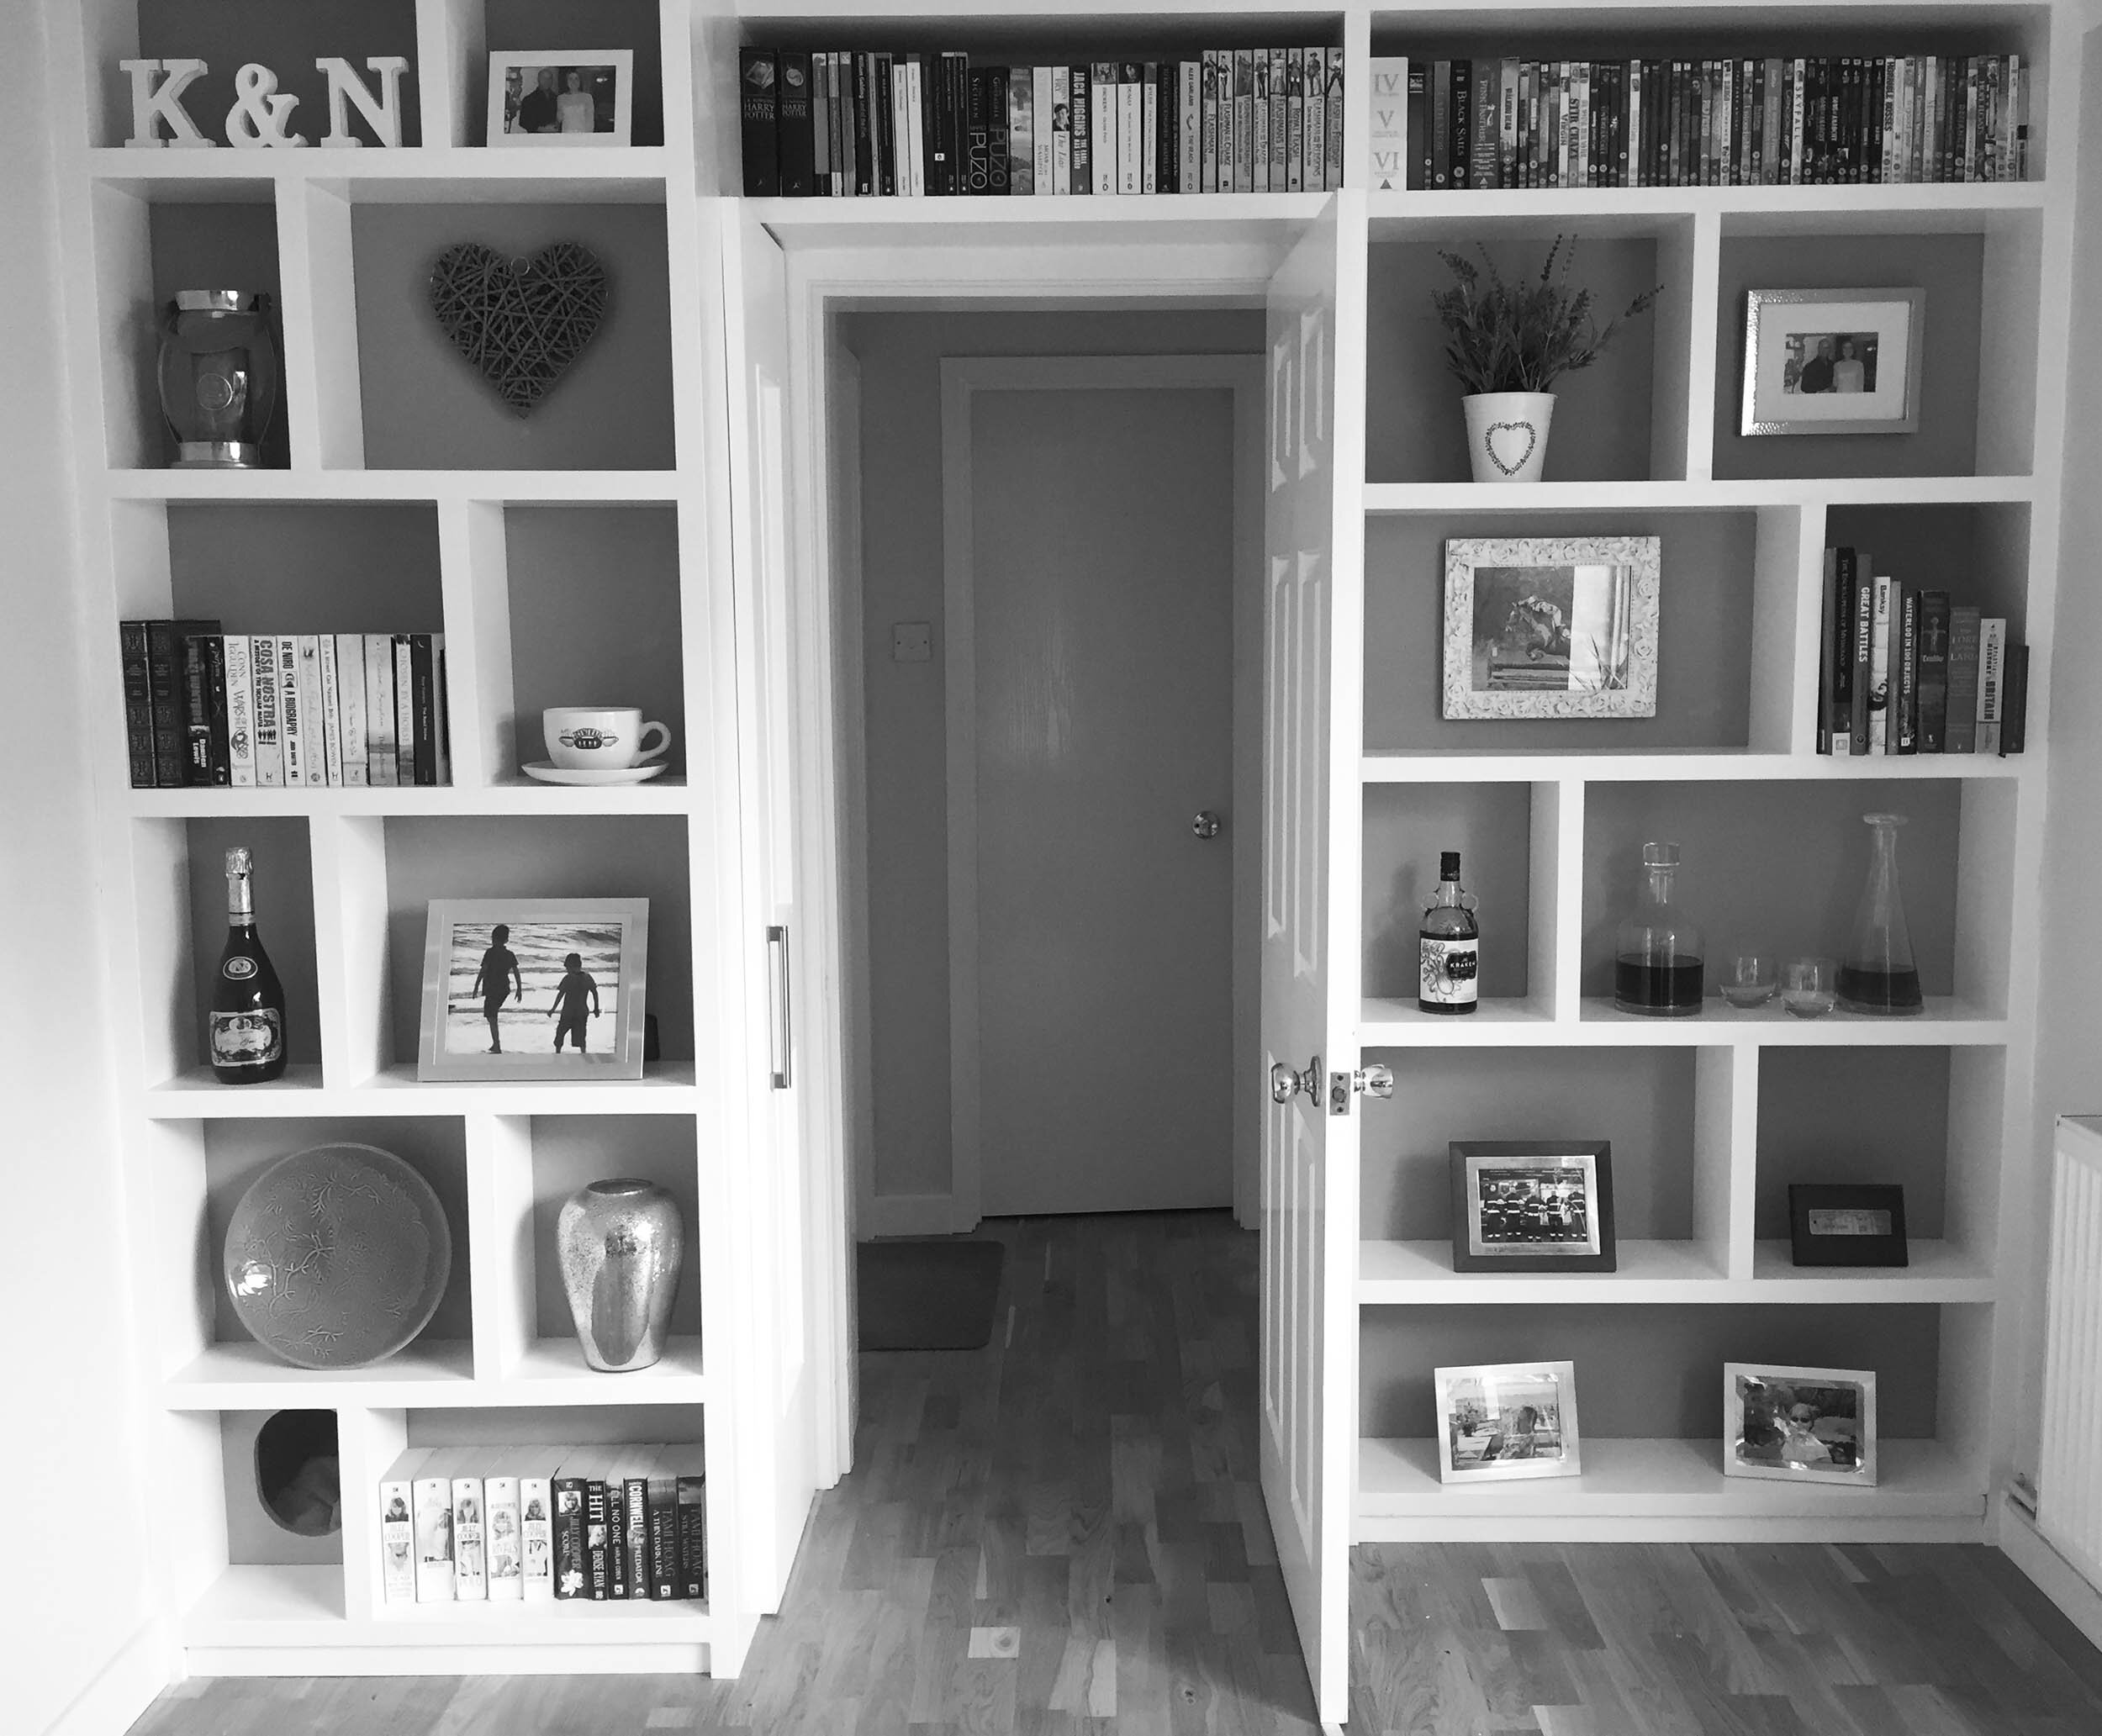 NathanClark_Bookcase with hidden pet house.jpg